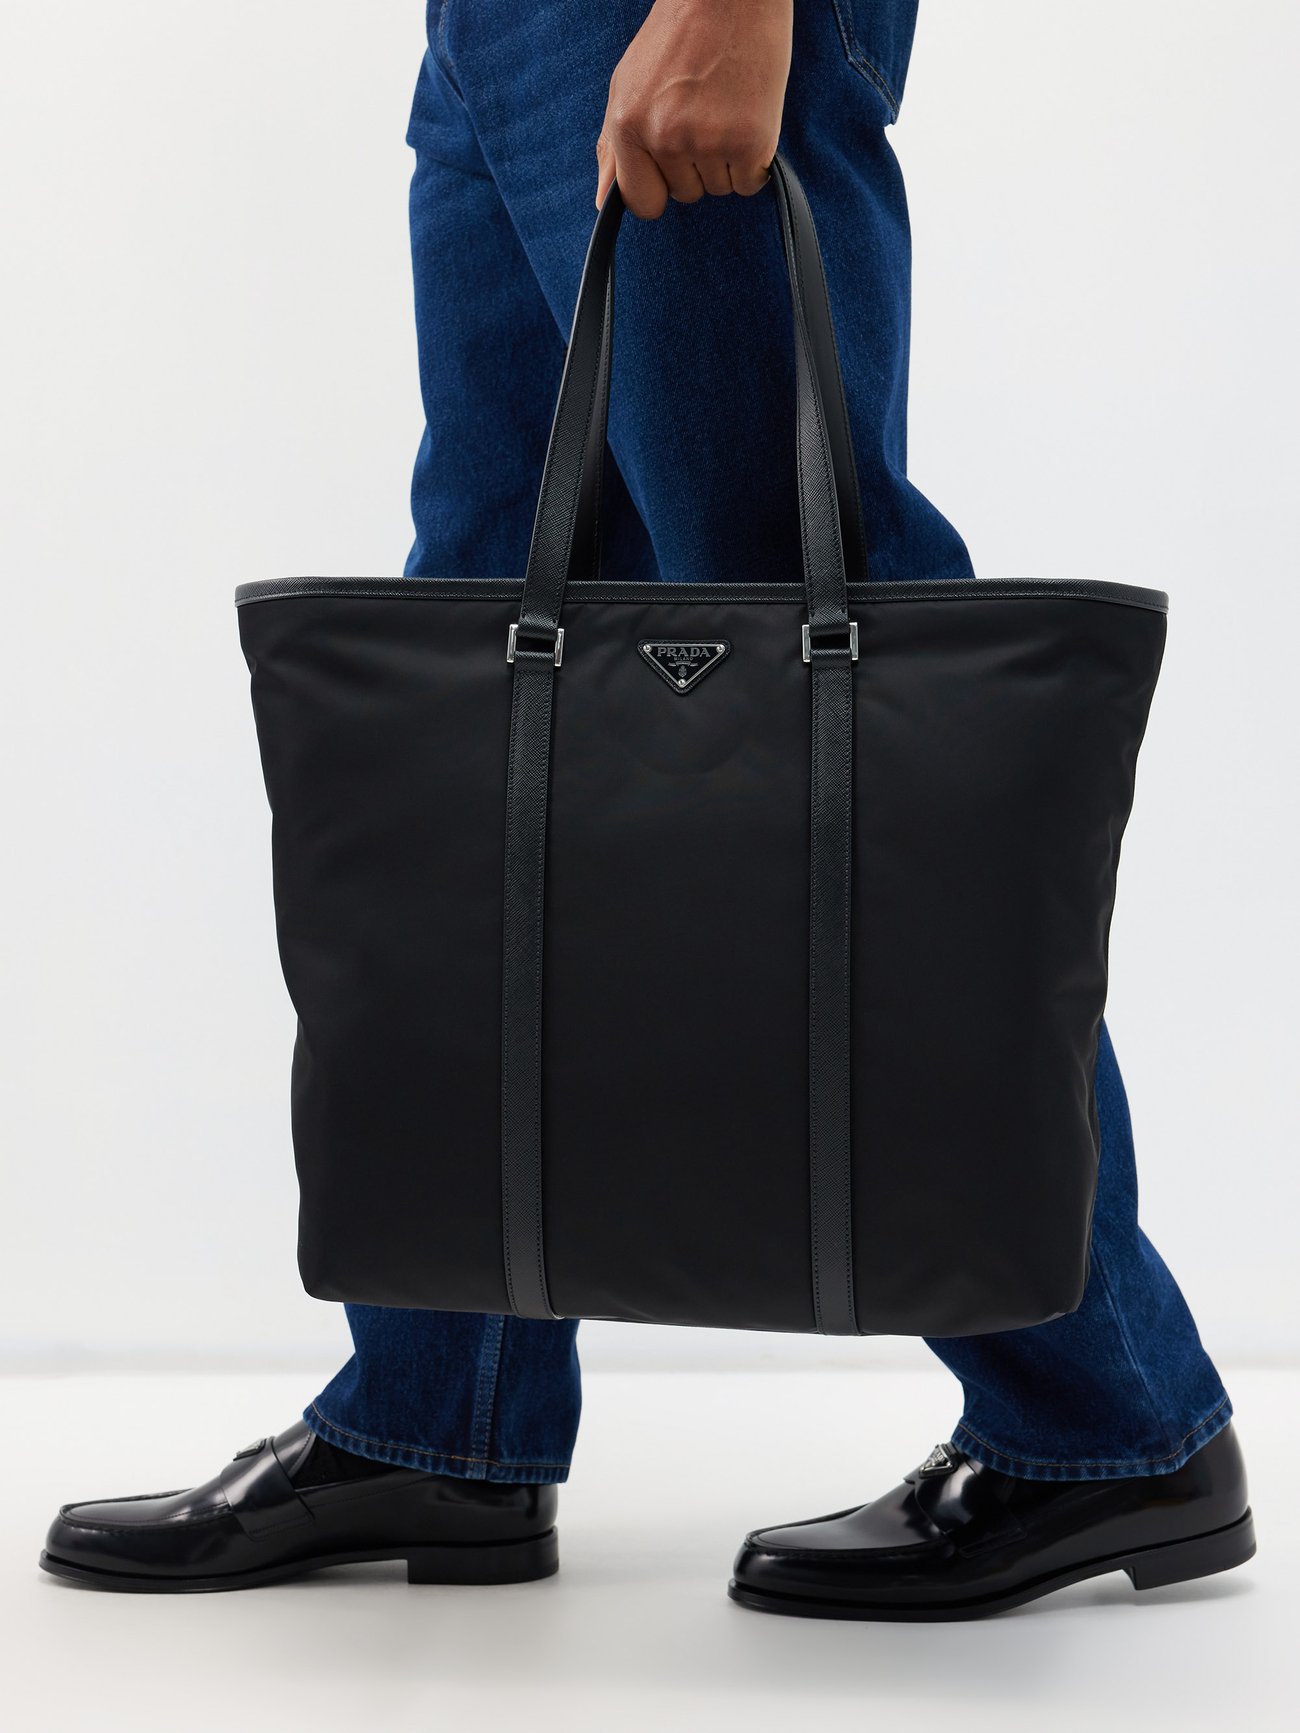 Black Re-Nylon leather-trimmed tote bag, Prada